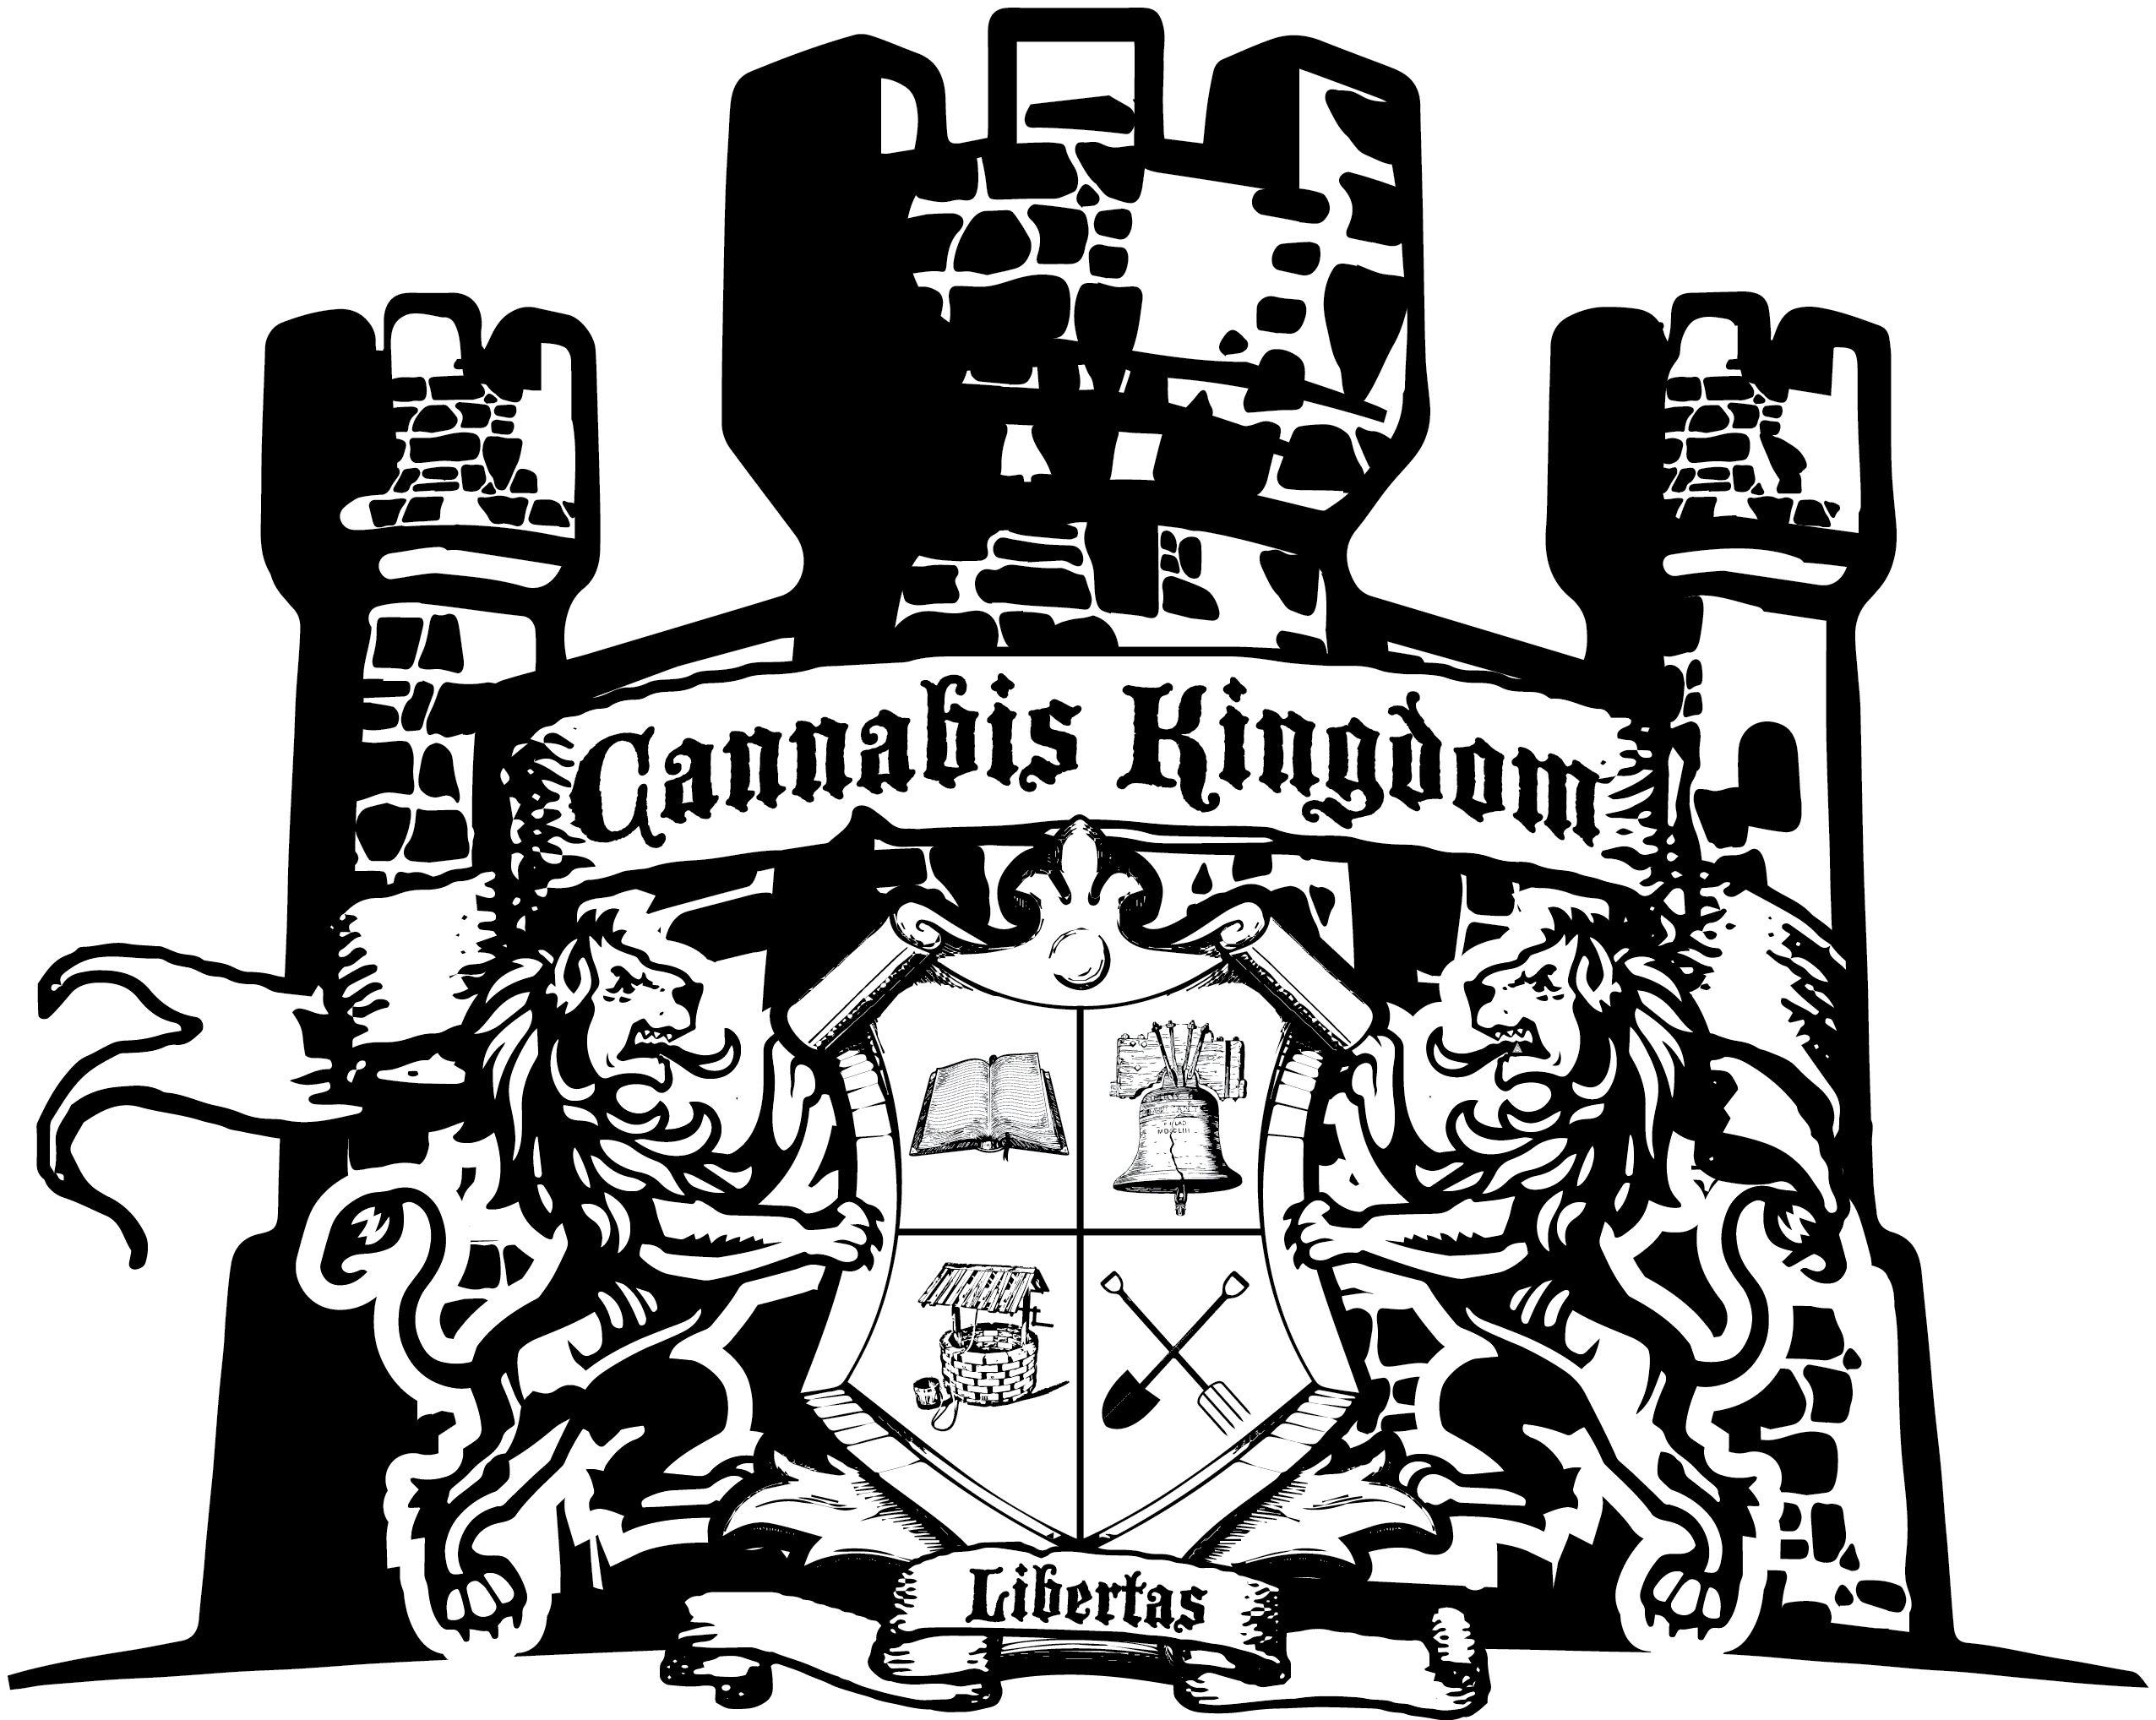 Cannabis Kingdom